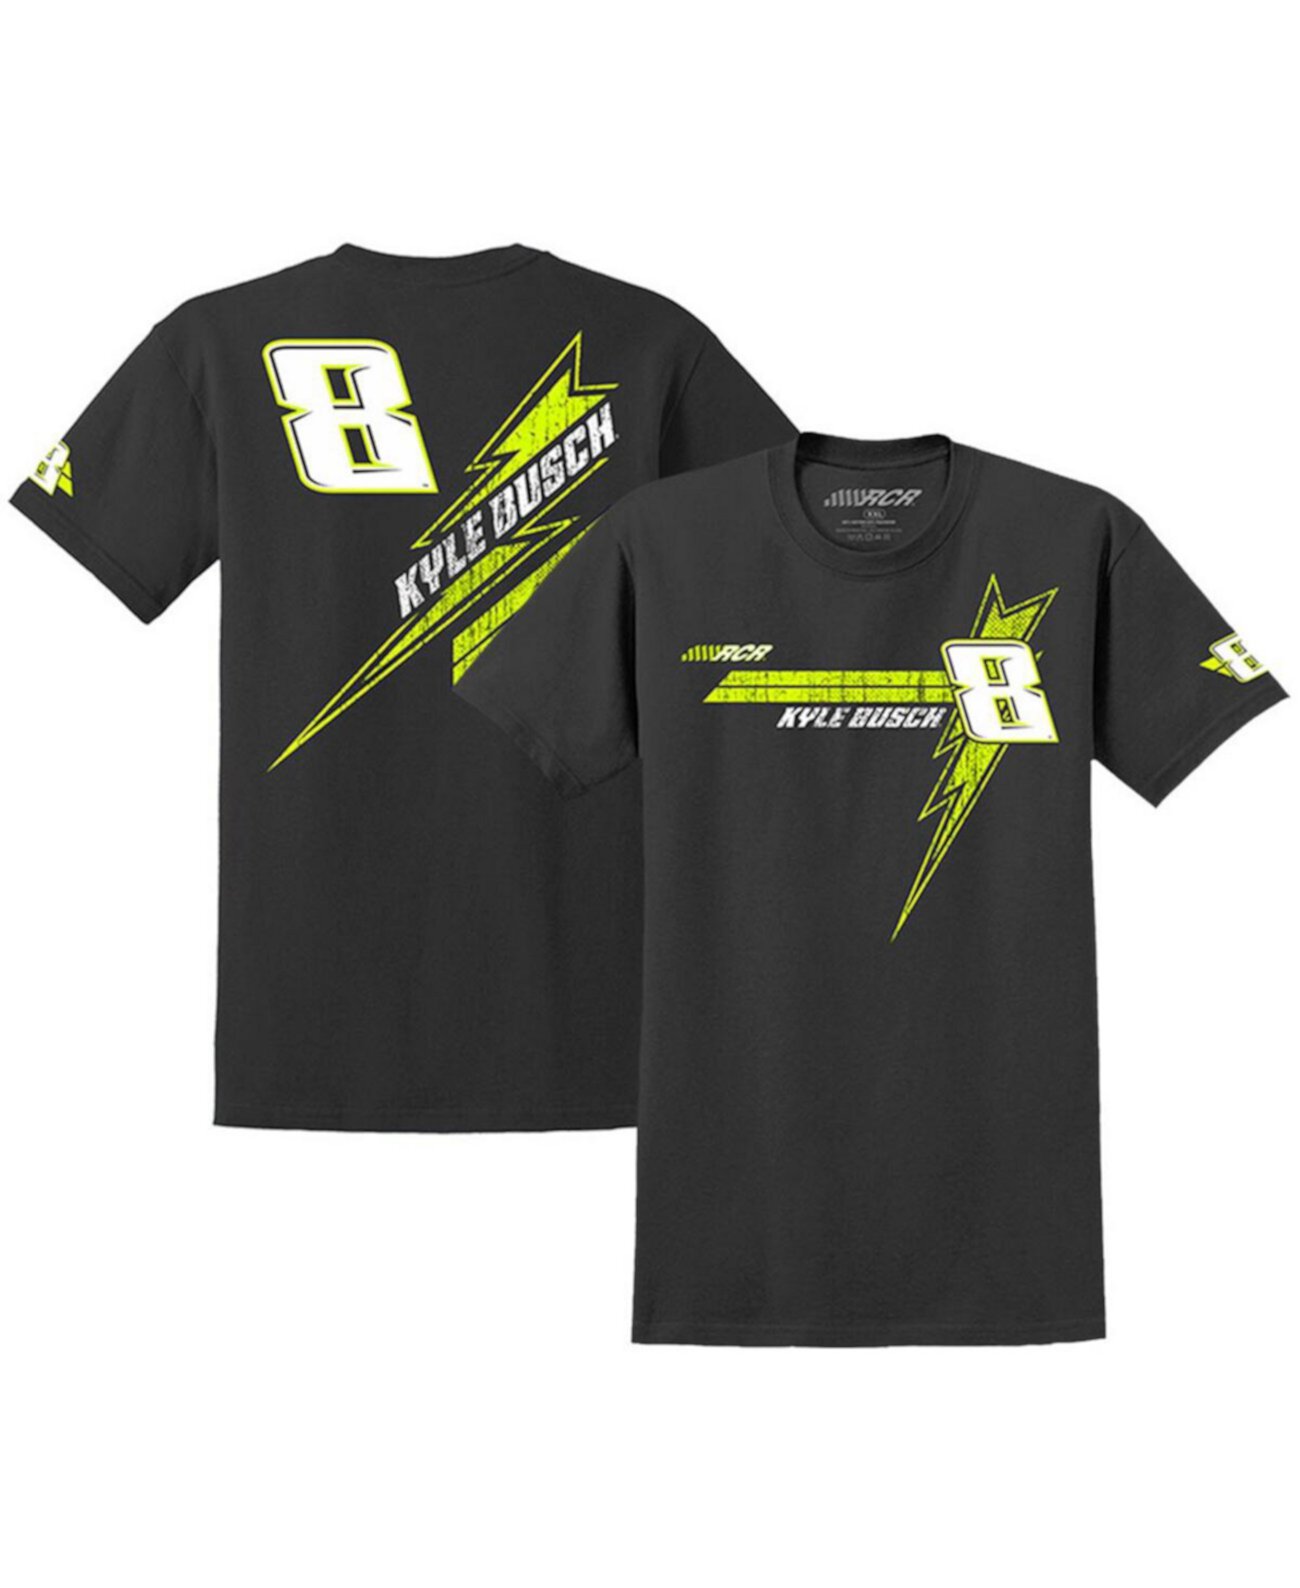 Мужская черная футболка Kyle Busch Lifestyle Richard Childress Racing Team Collection